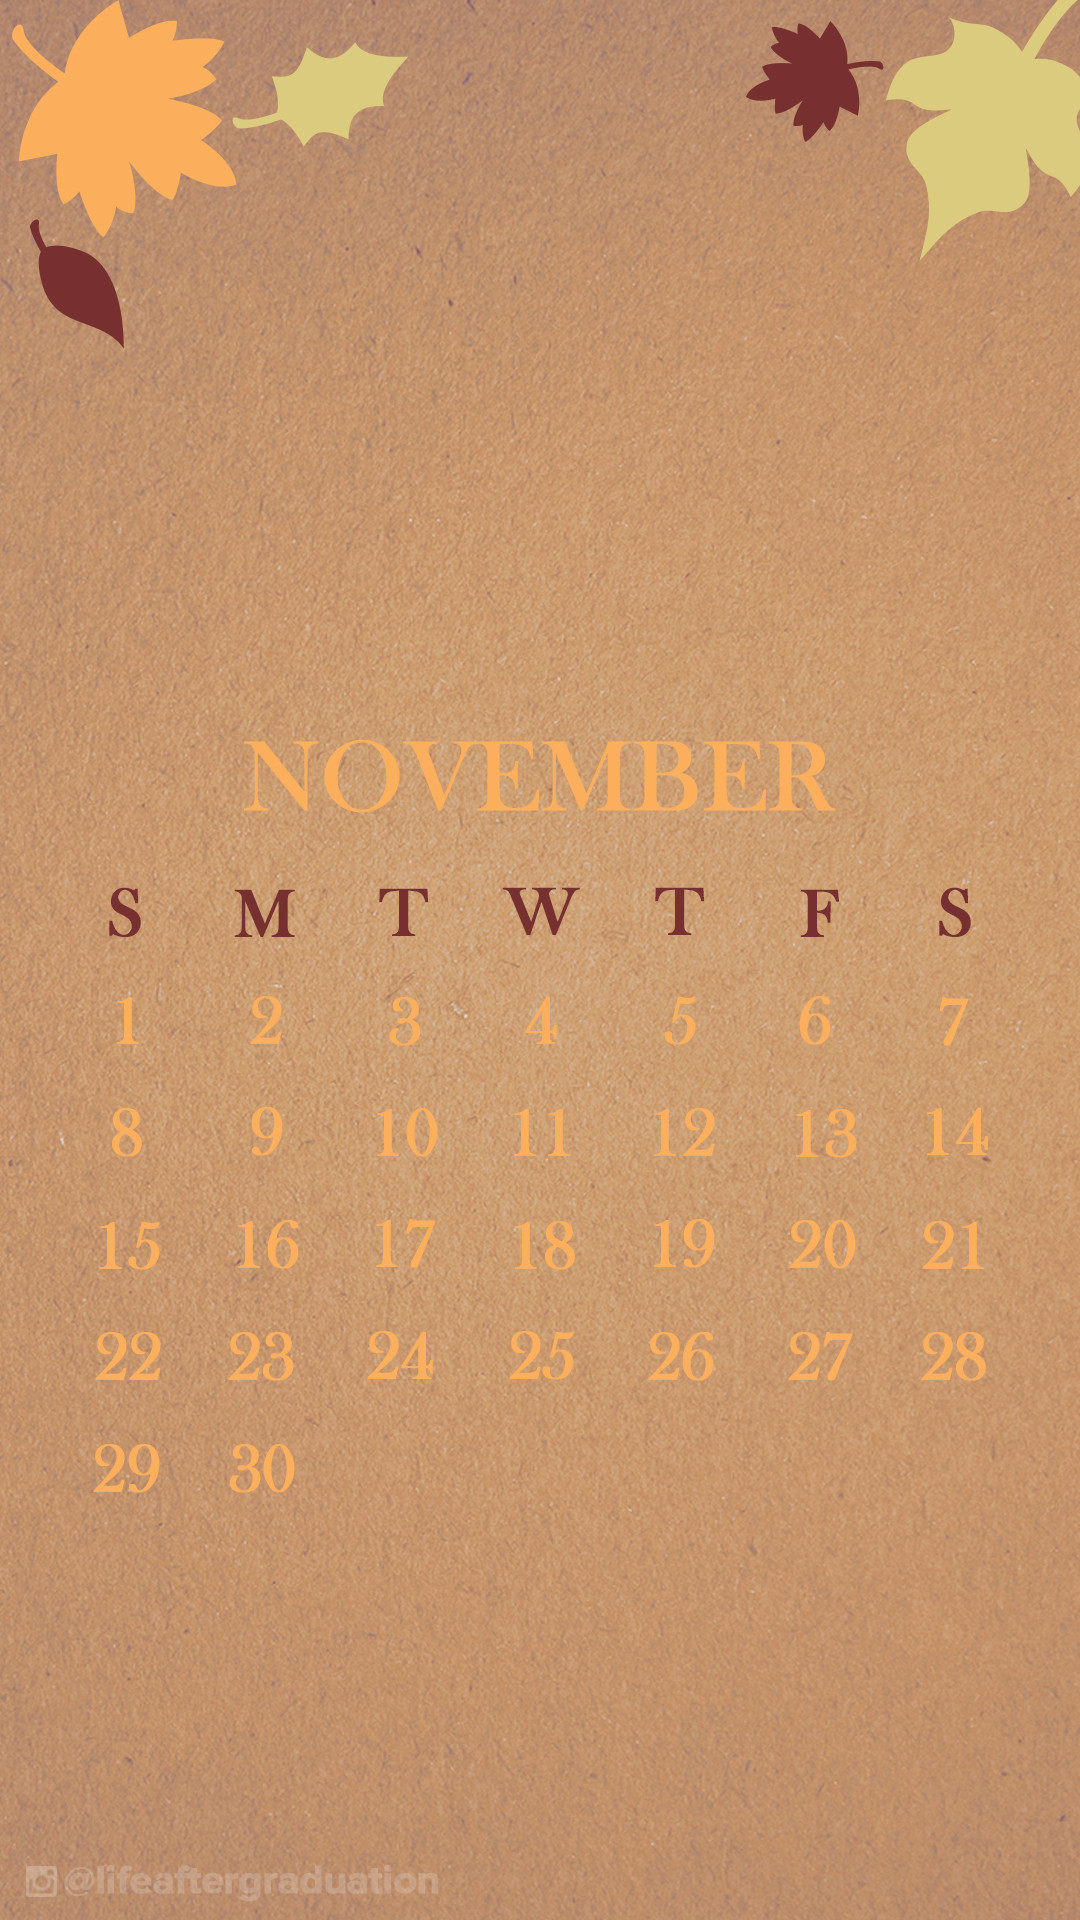 1080x1920 november wallpaper. via pinterest Â· Nov_WallpaperCalendar_2_M